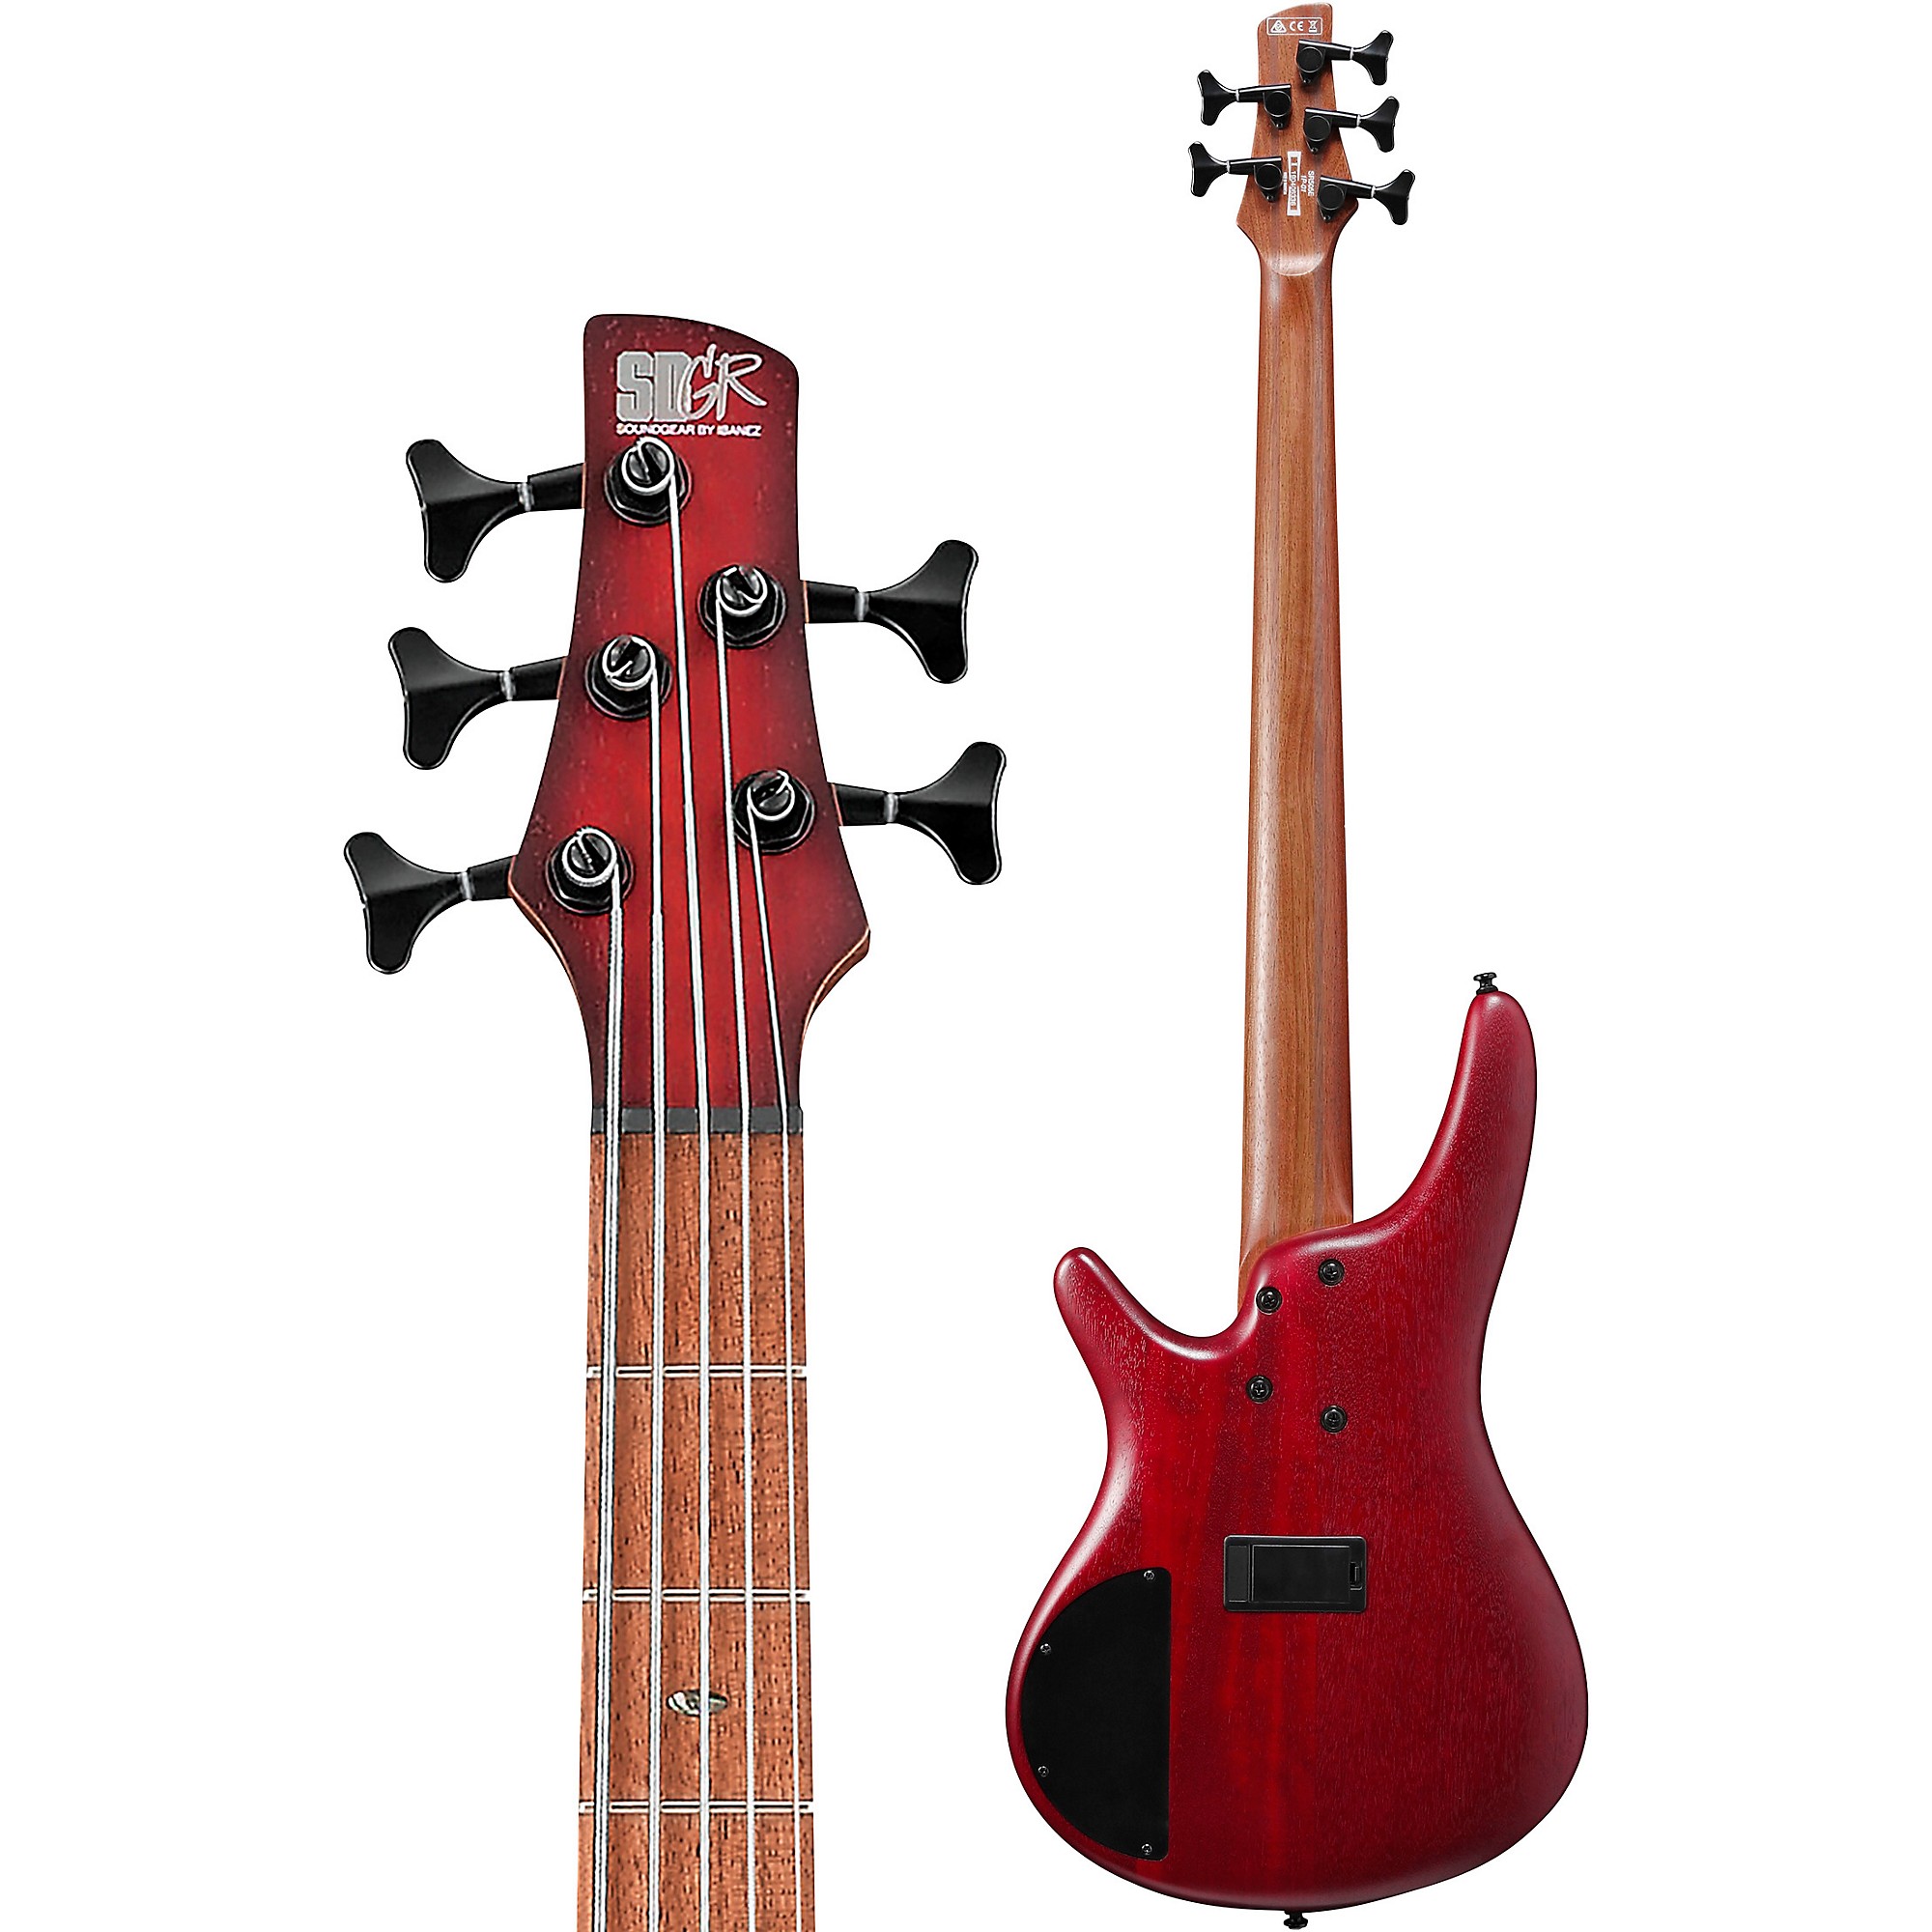 Ibanez SR500E 5-String Electric Bass Guitar Blackberry Sunburst Flat